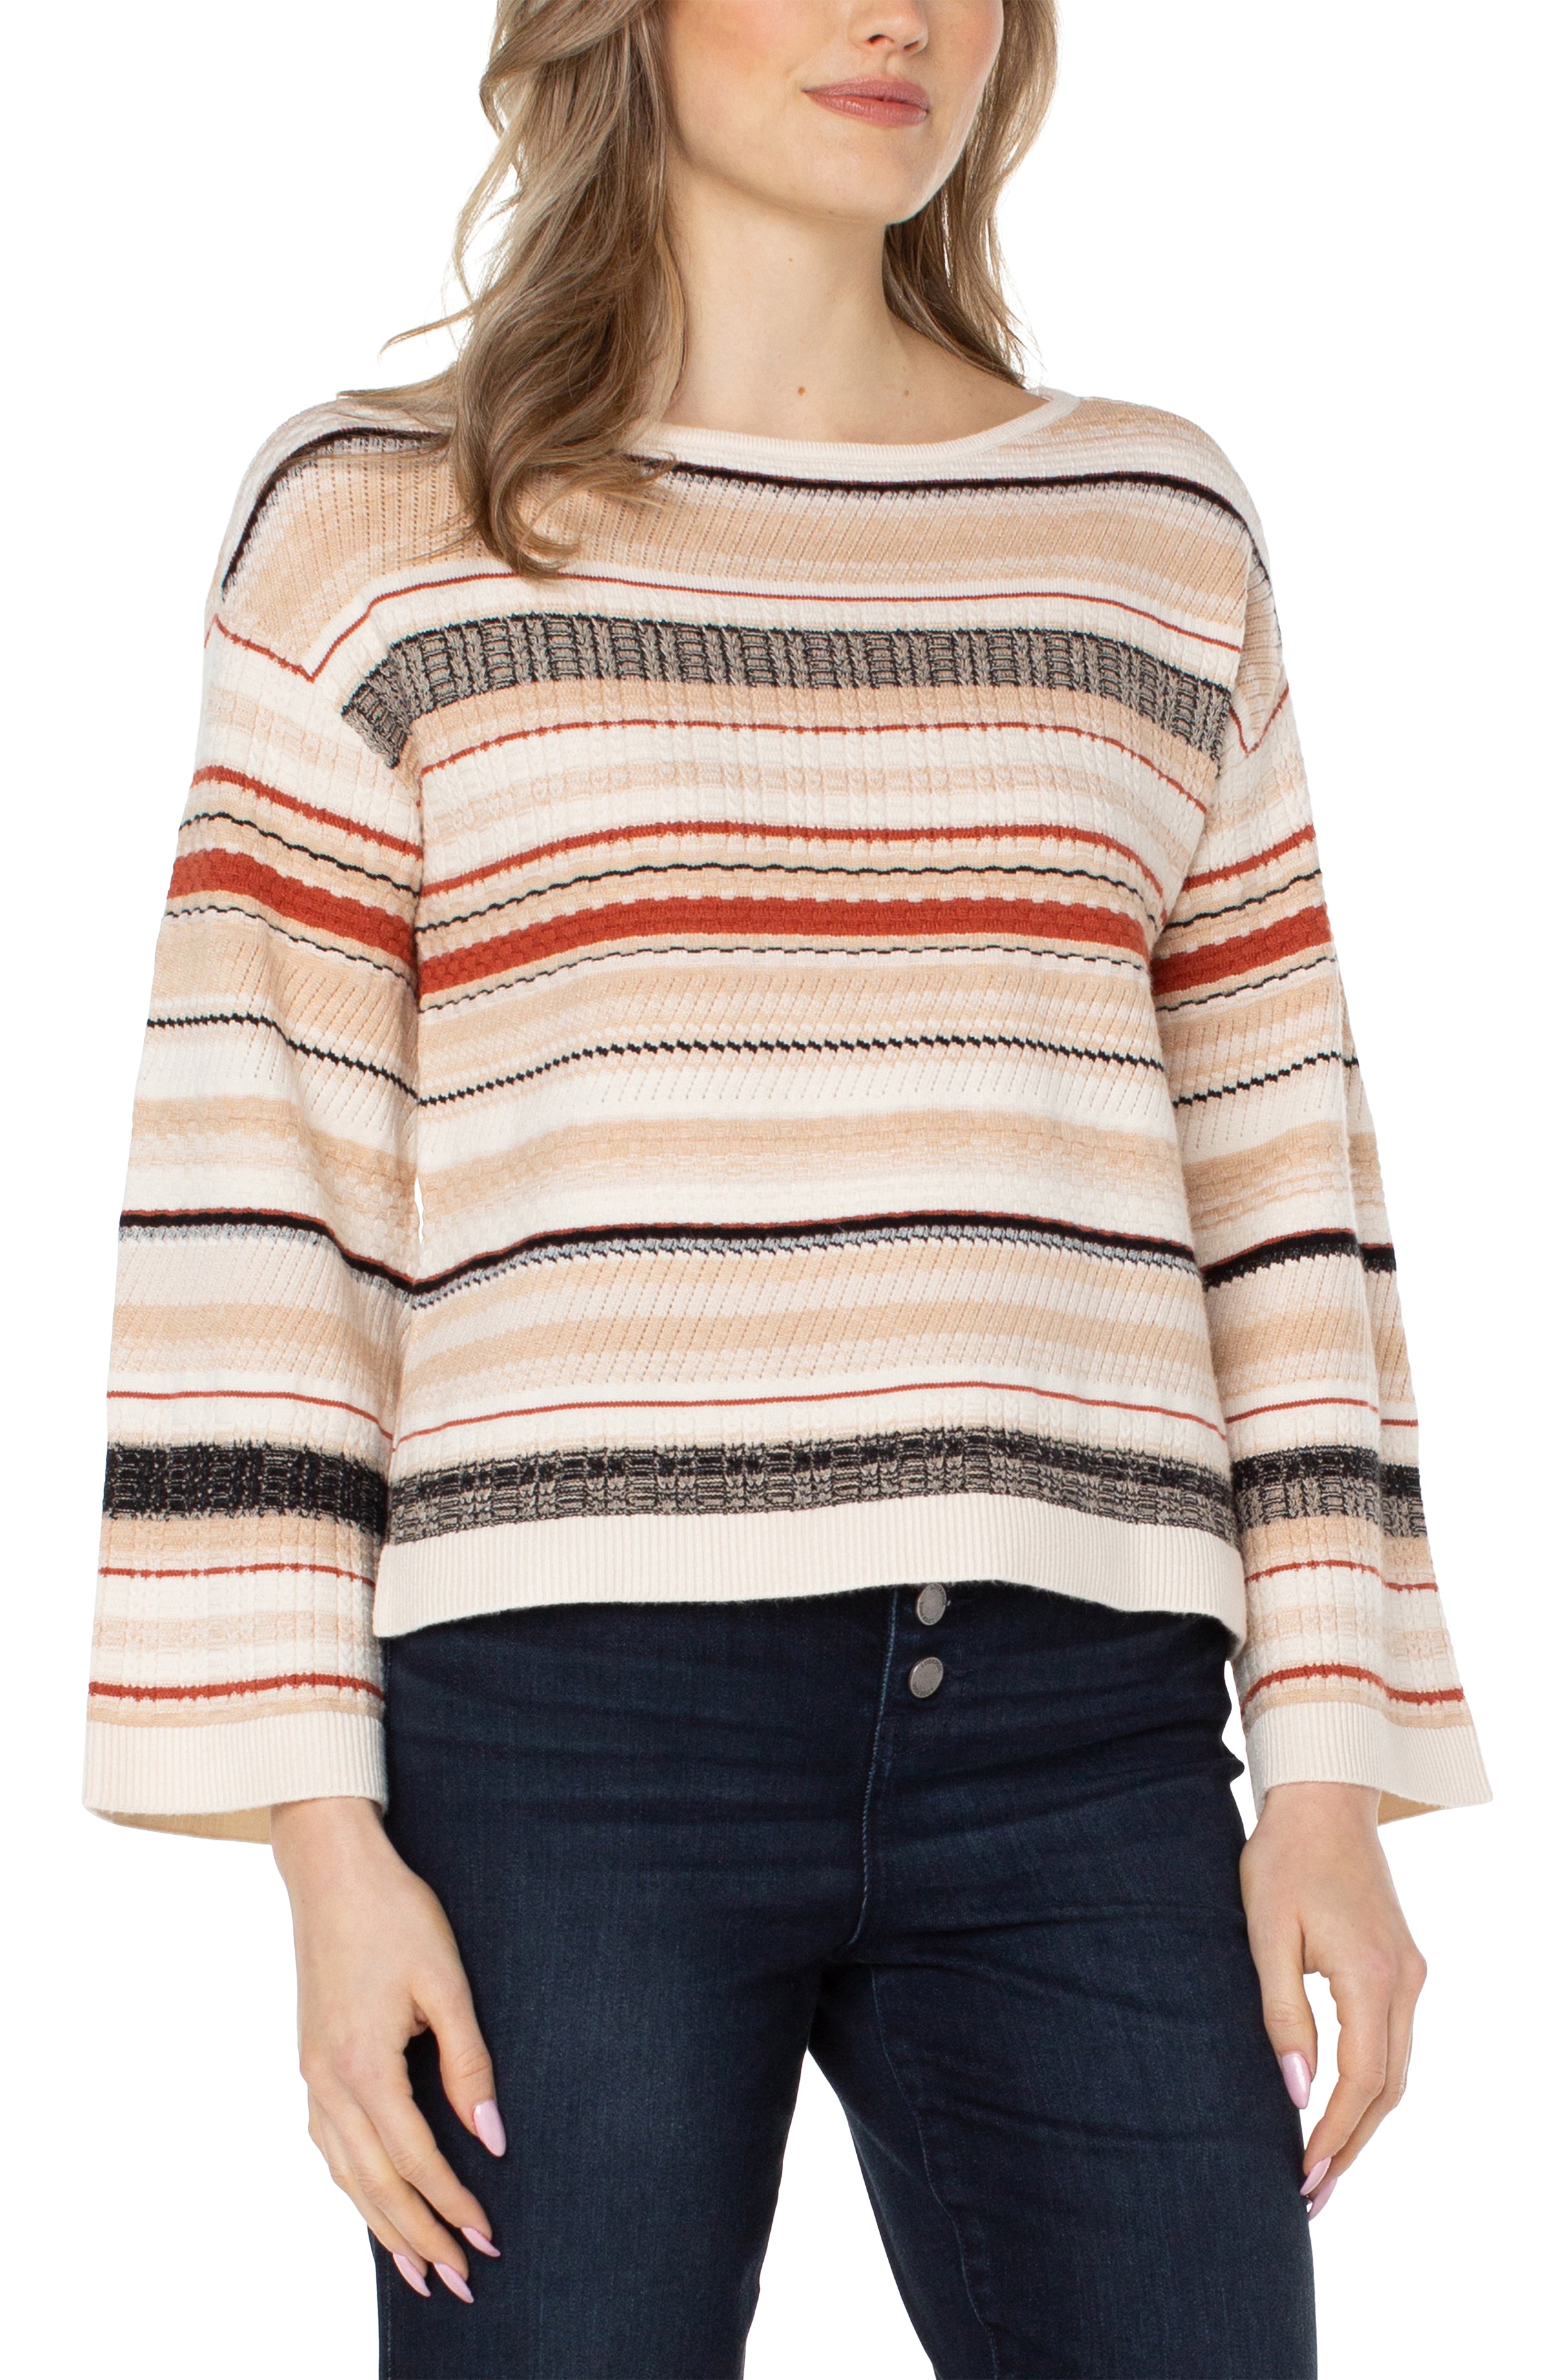 LPLA Boatneck Striped Sweater. XLARGE